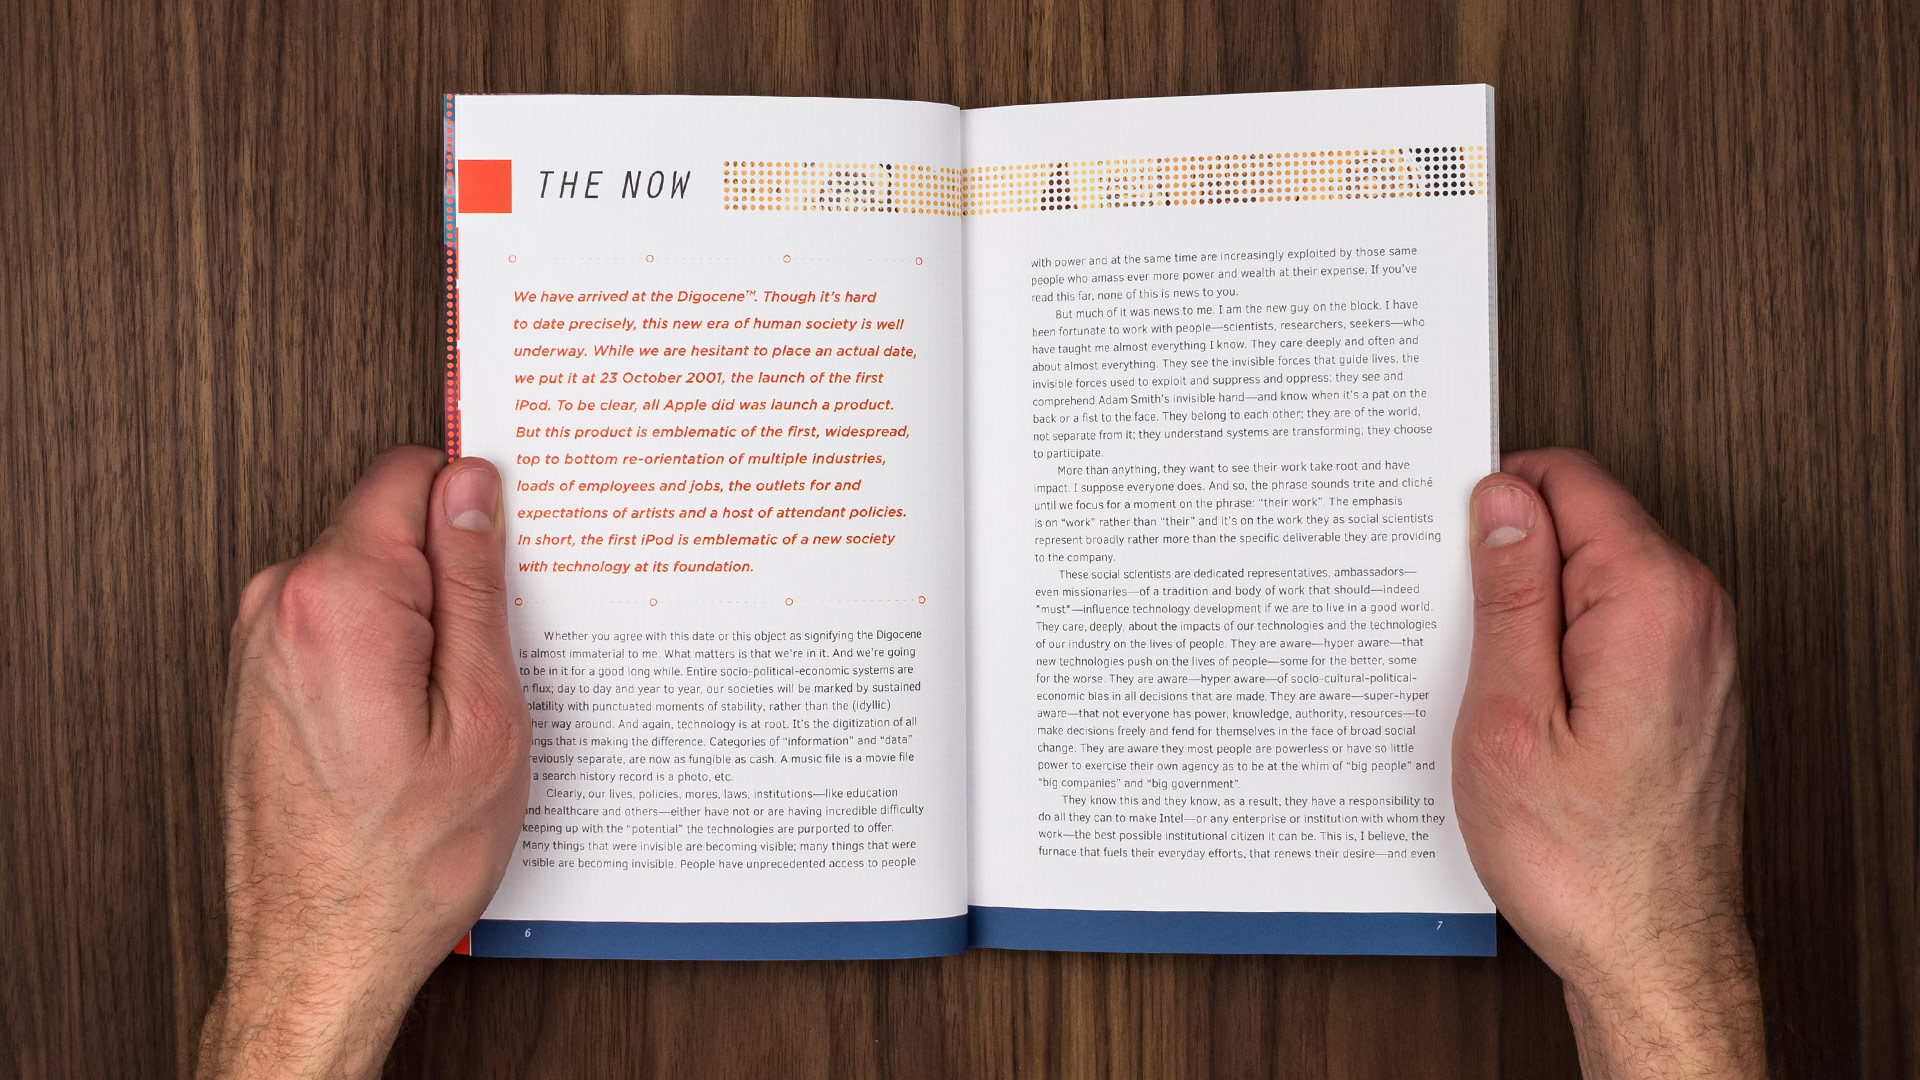 Book layout design for Seven Words For Design